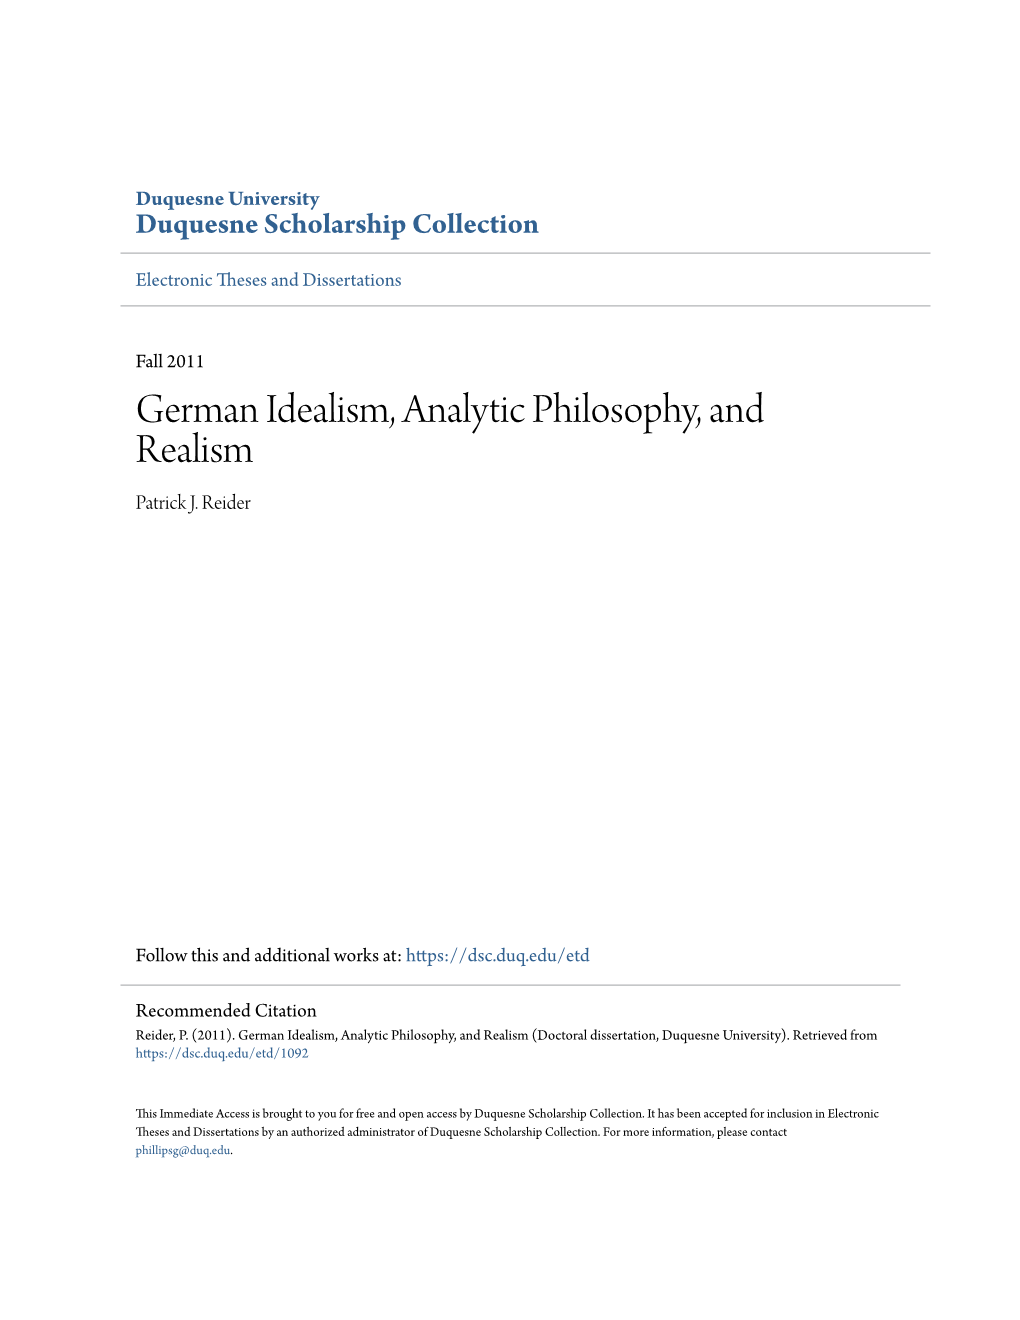 German Idealism, Analytic Philosophy, and Realism Patrick J